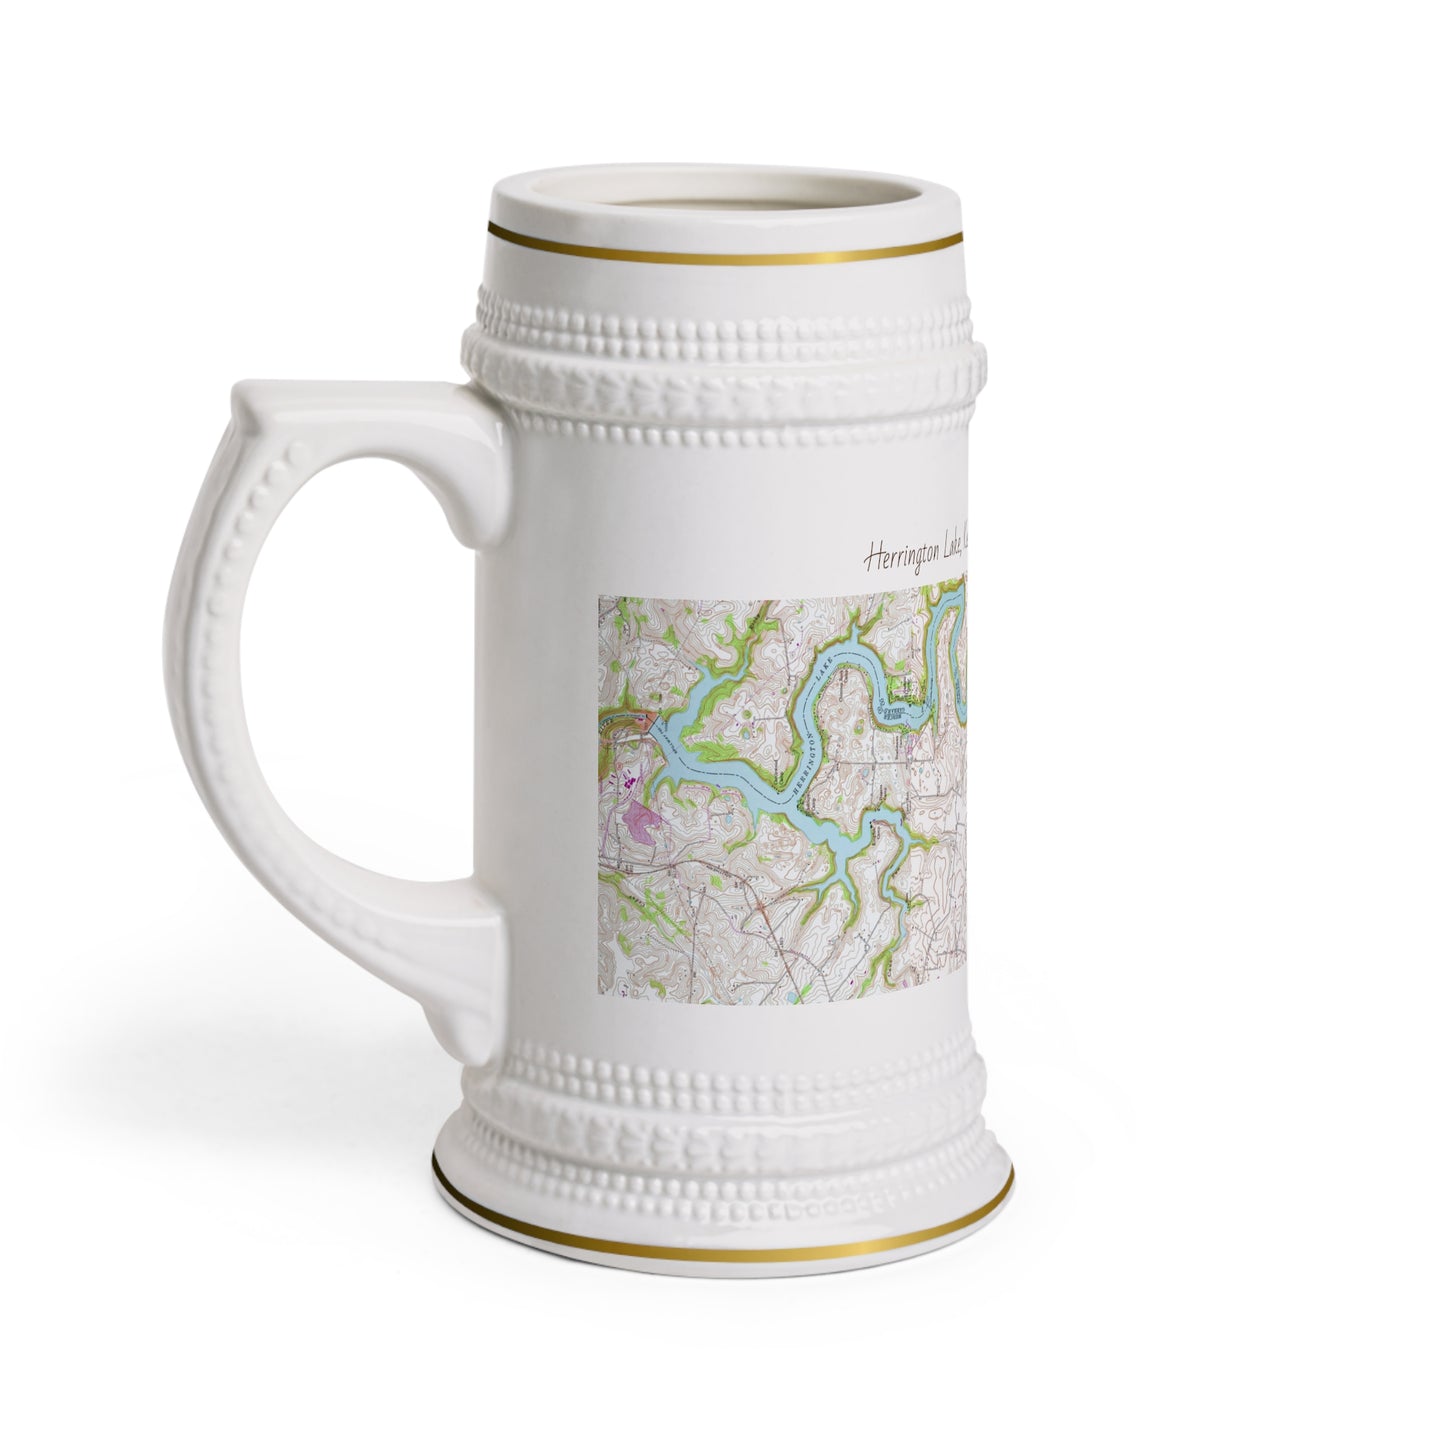 Herrington Lake 1952 USGS Topographic Map Collectible Ceramic Beer Stein Mug, Natural Colors